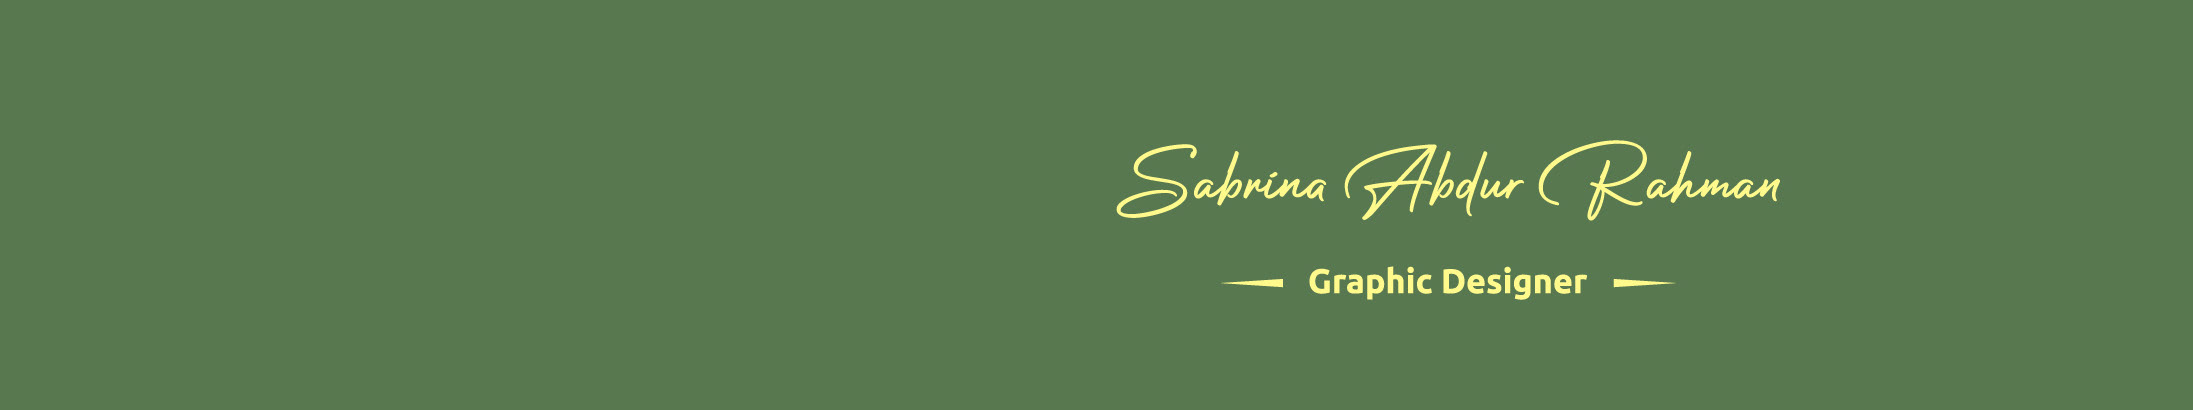 Sabrina Abdur Rahman's profile banner